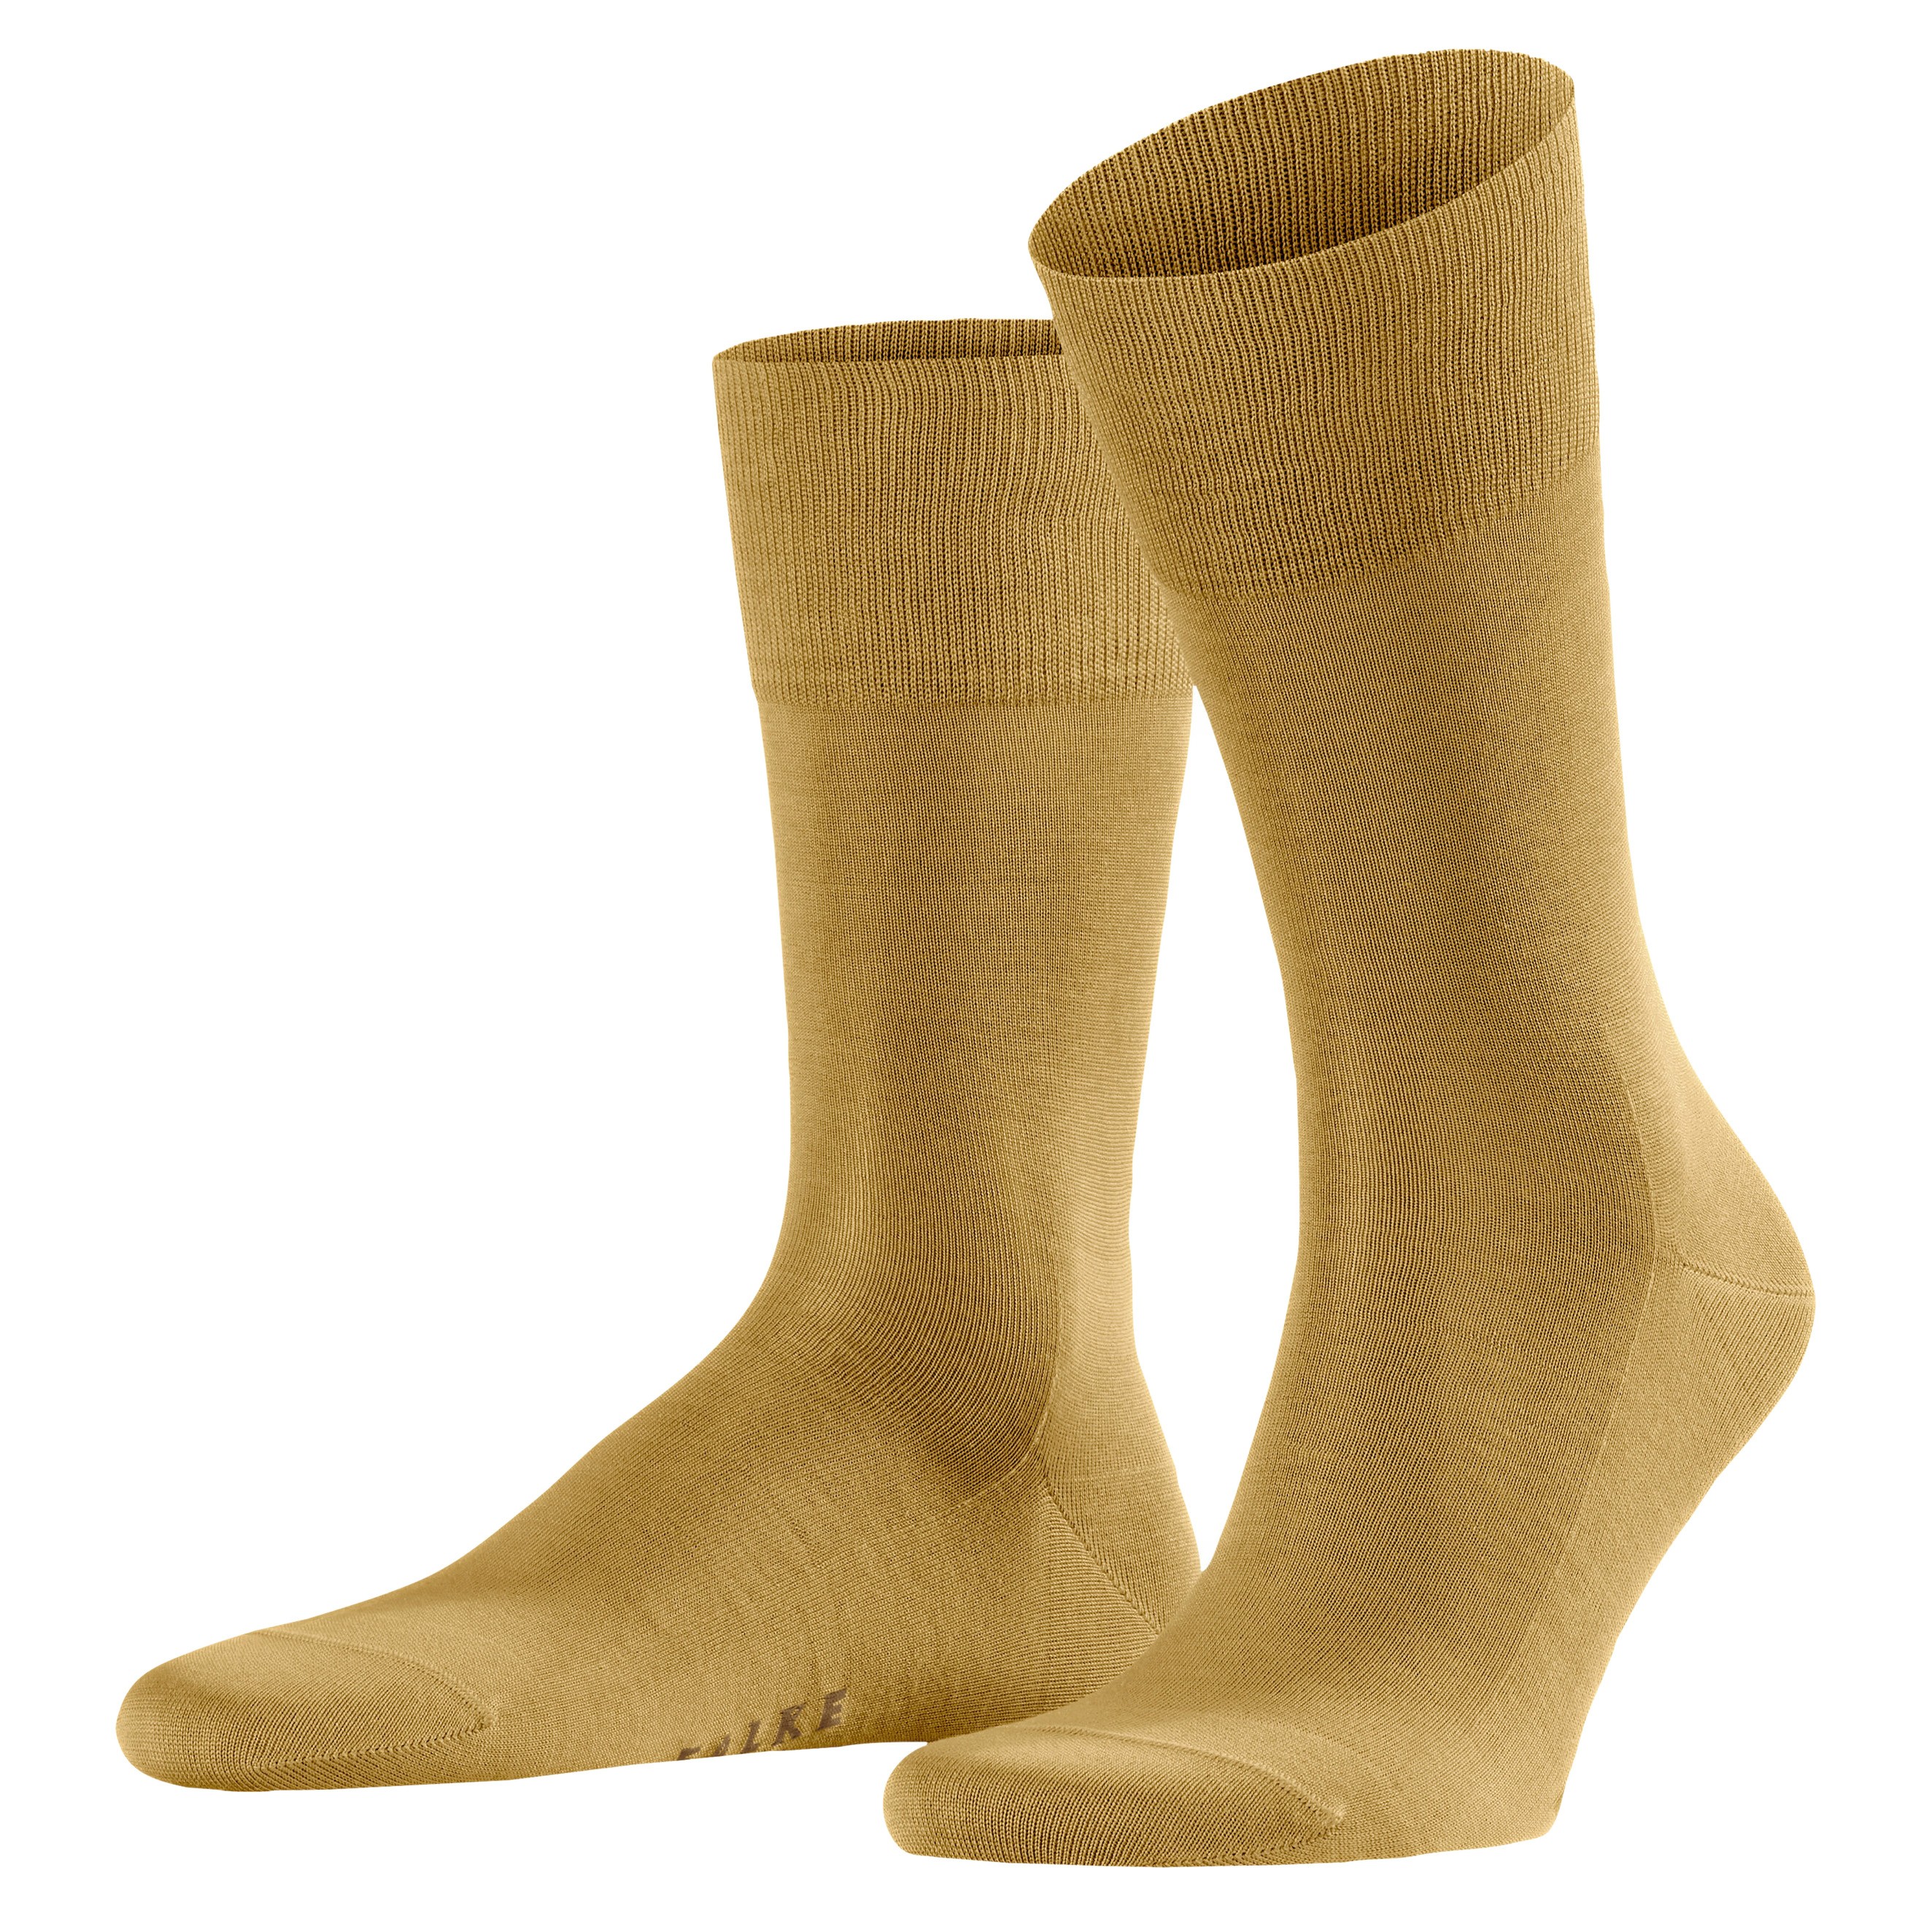 maniac pil vangst Socks Tiago - brass: Socks for man brand FALKE for sale online at l...